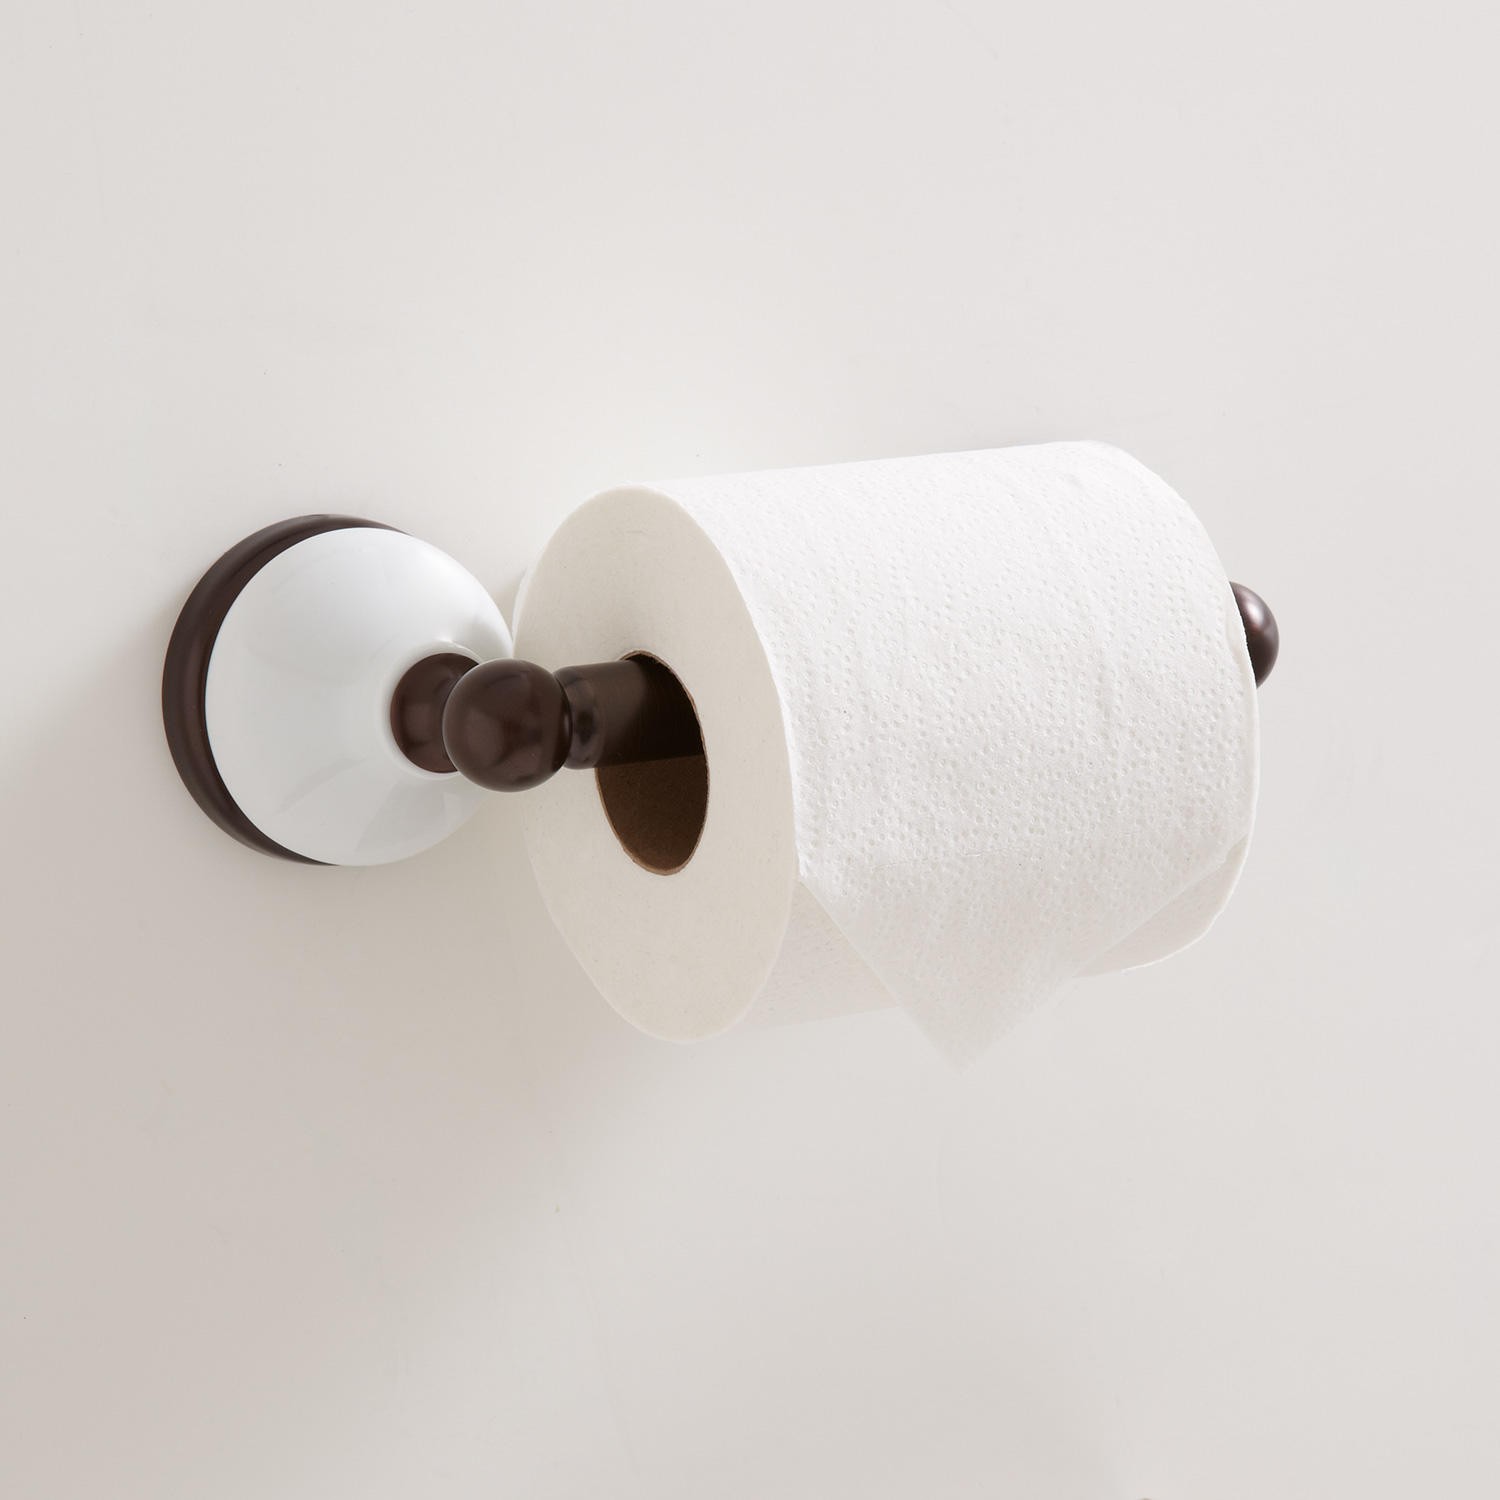  Accessories Toilet Paper Holders Houston Toilet Paper Holder